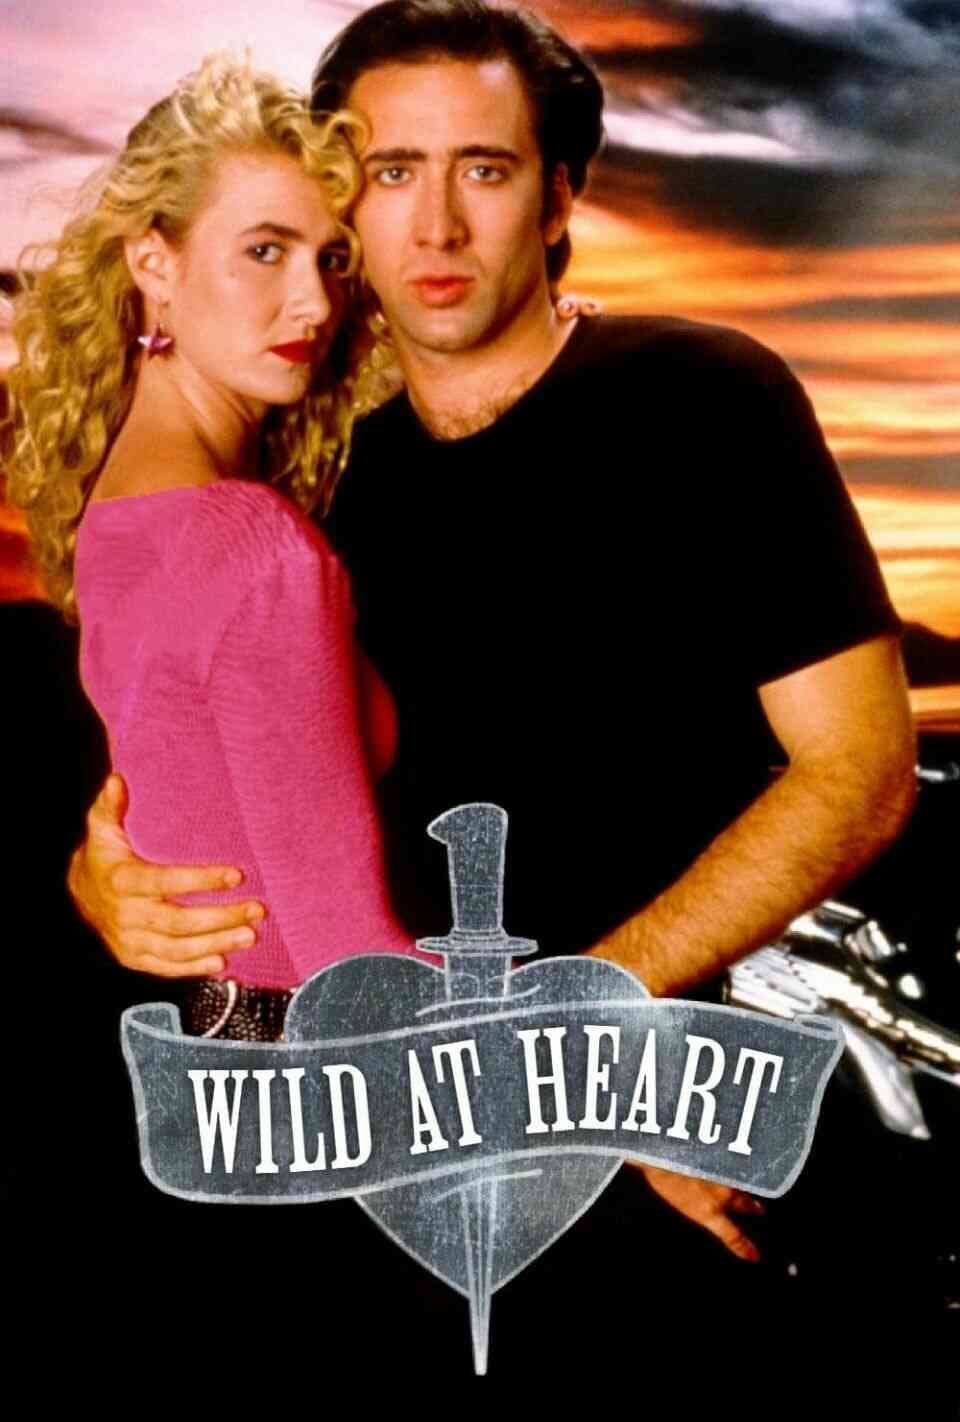 Read Wild at Heart screenplay.